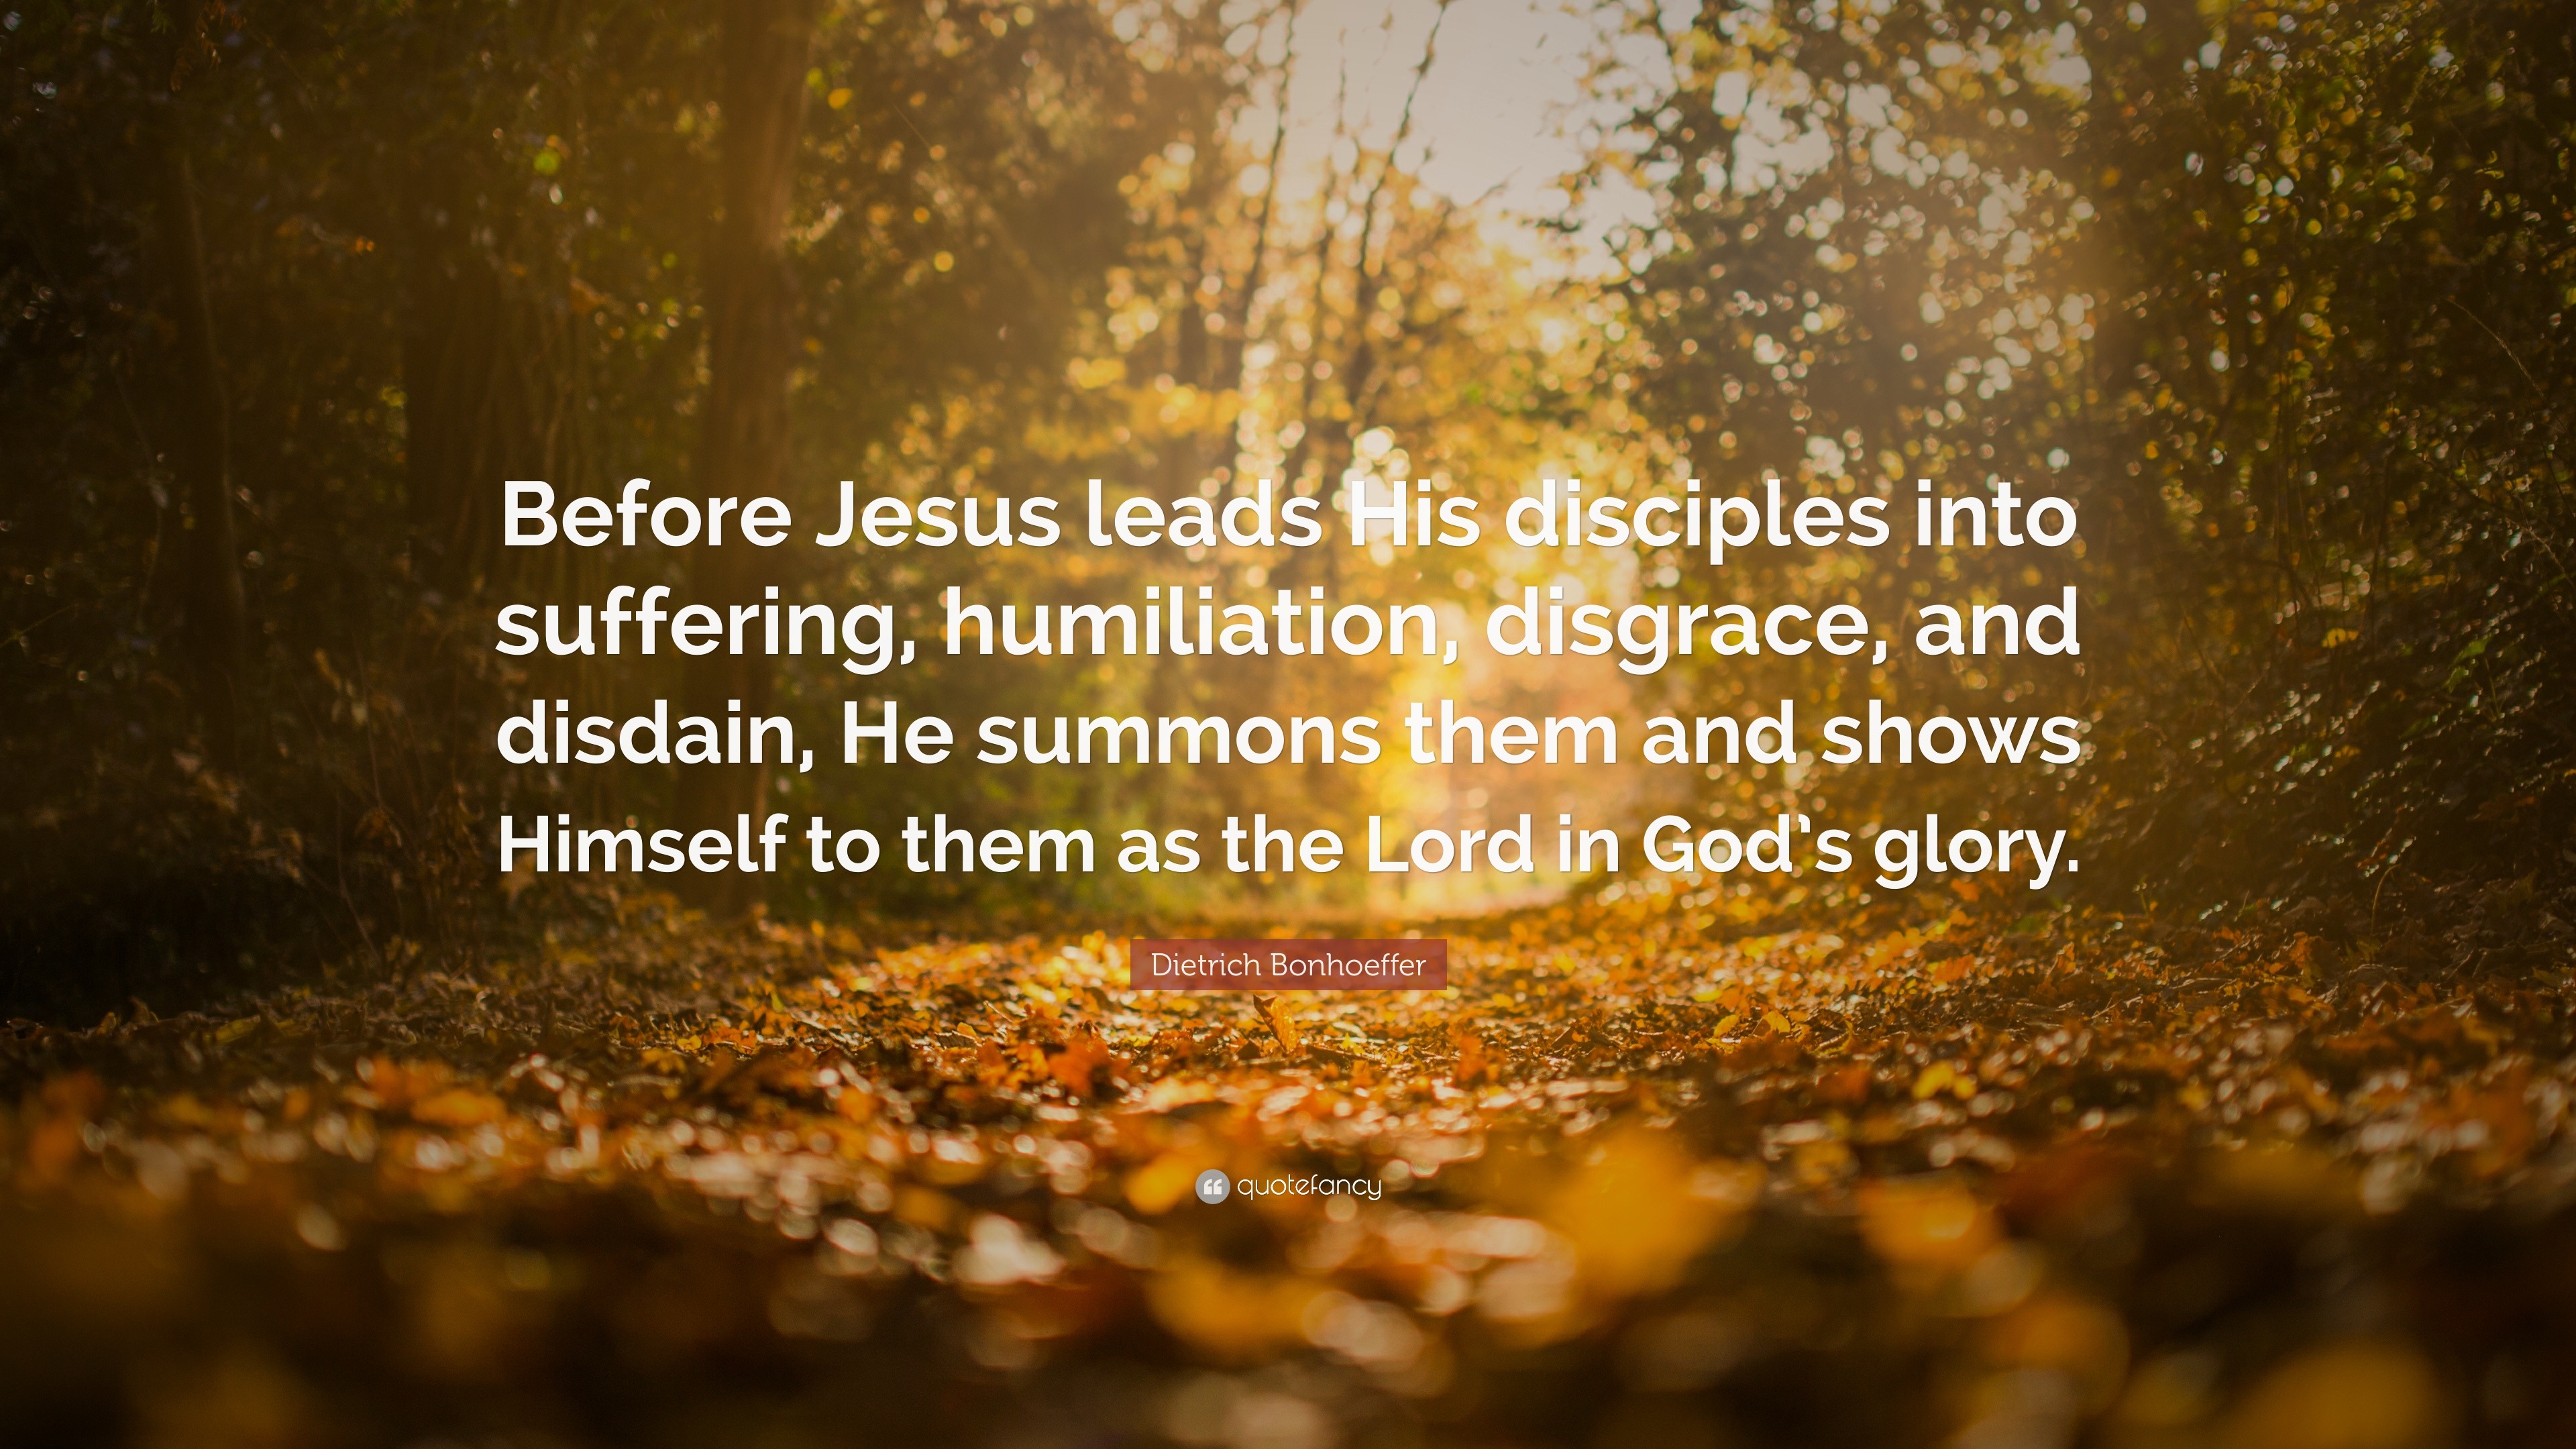 Dietrich Bonhoeffer Quote: “Before Jesus leads His disciples into ...